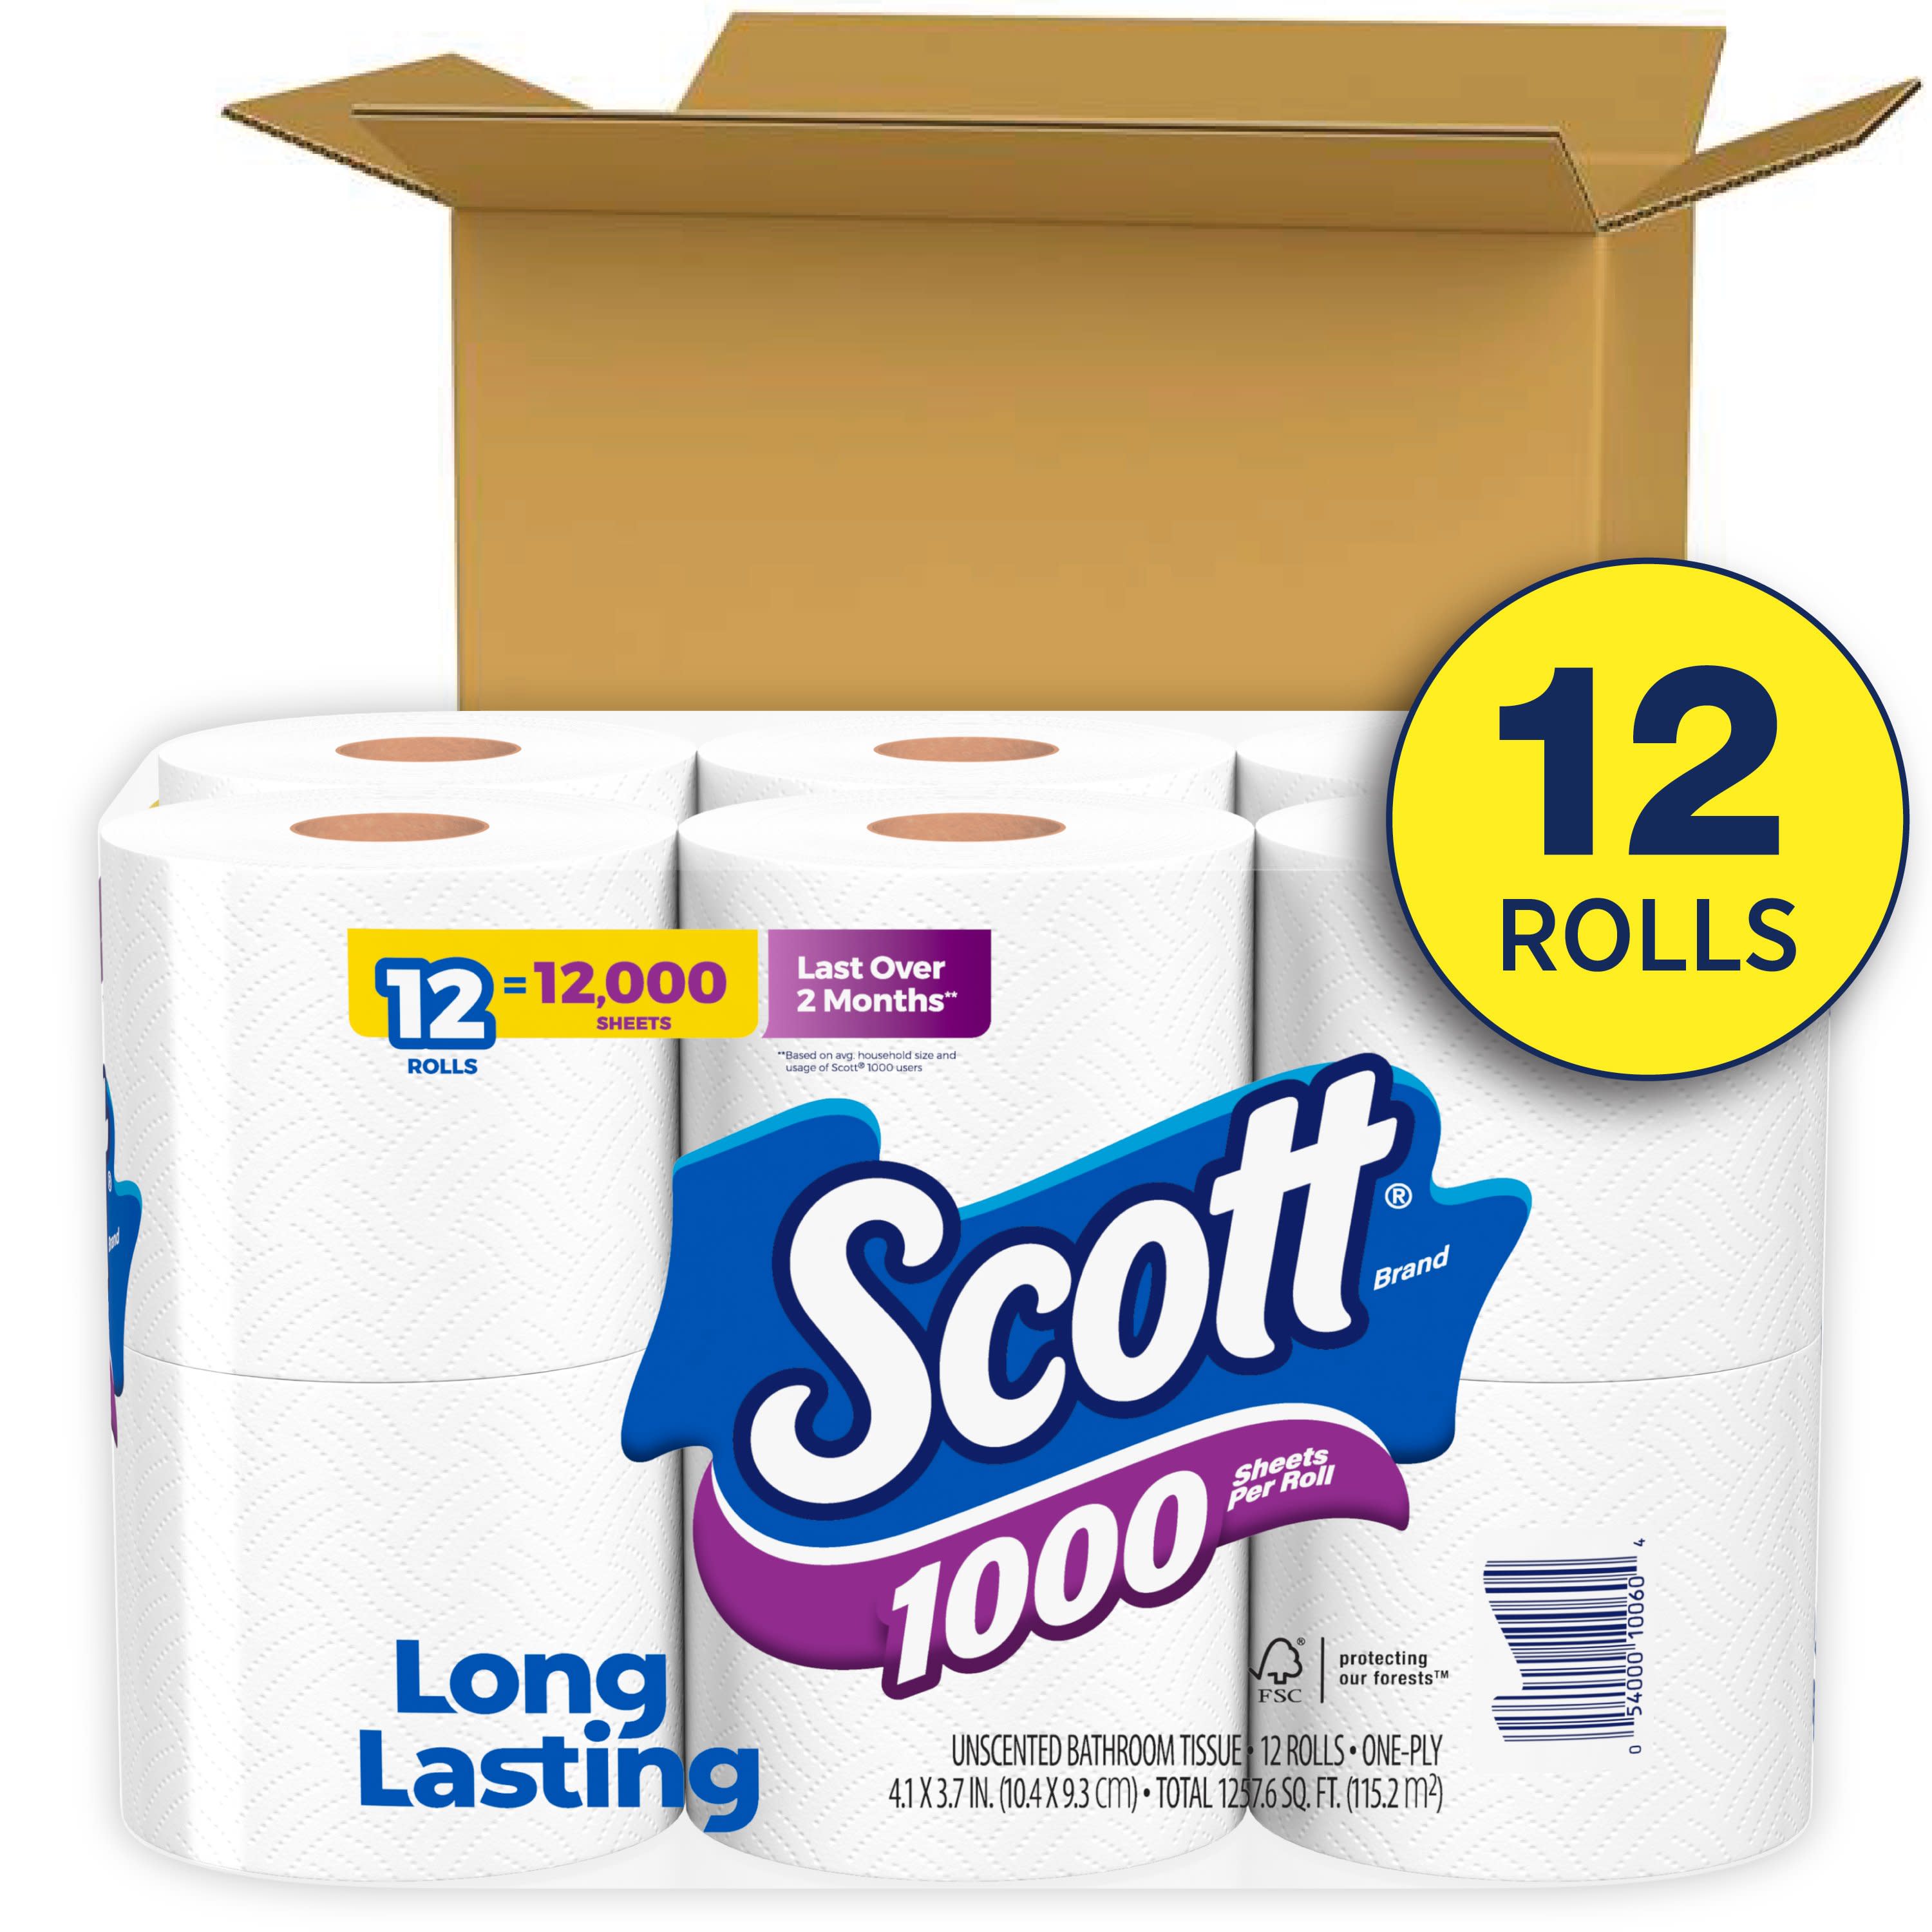 Scott 1000 Toilet Paper, 12 Rolls, 1,000 Sheets per Roll - image 3 of 11